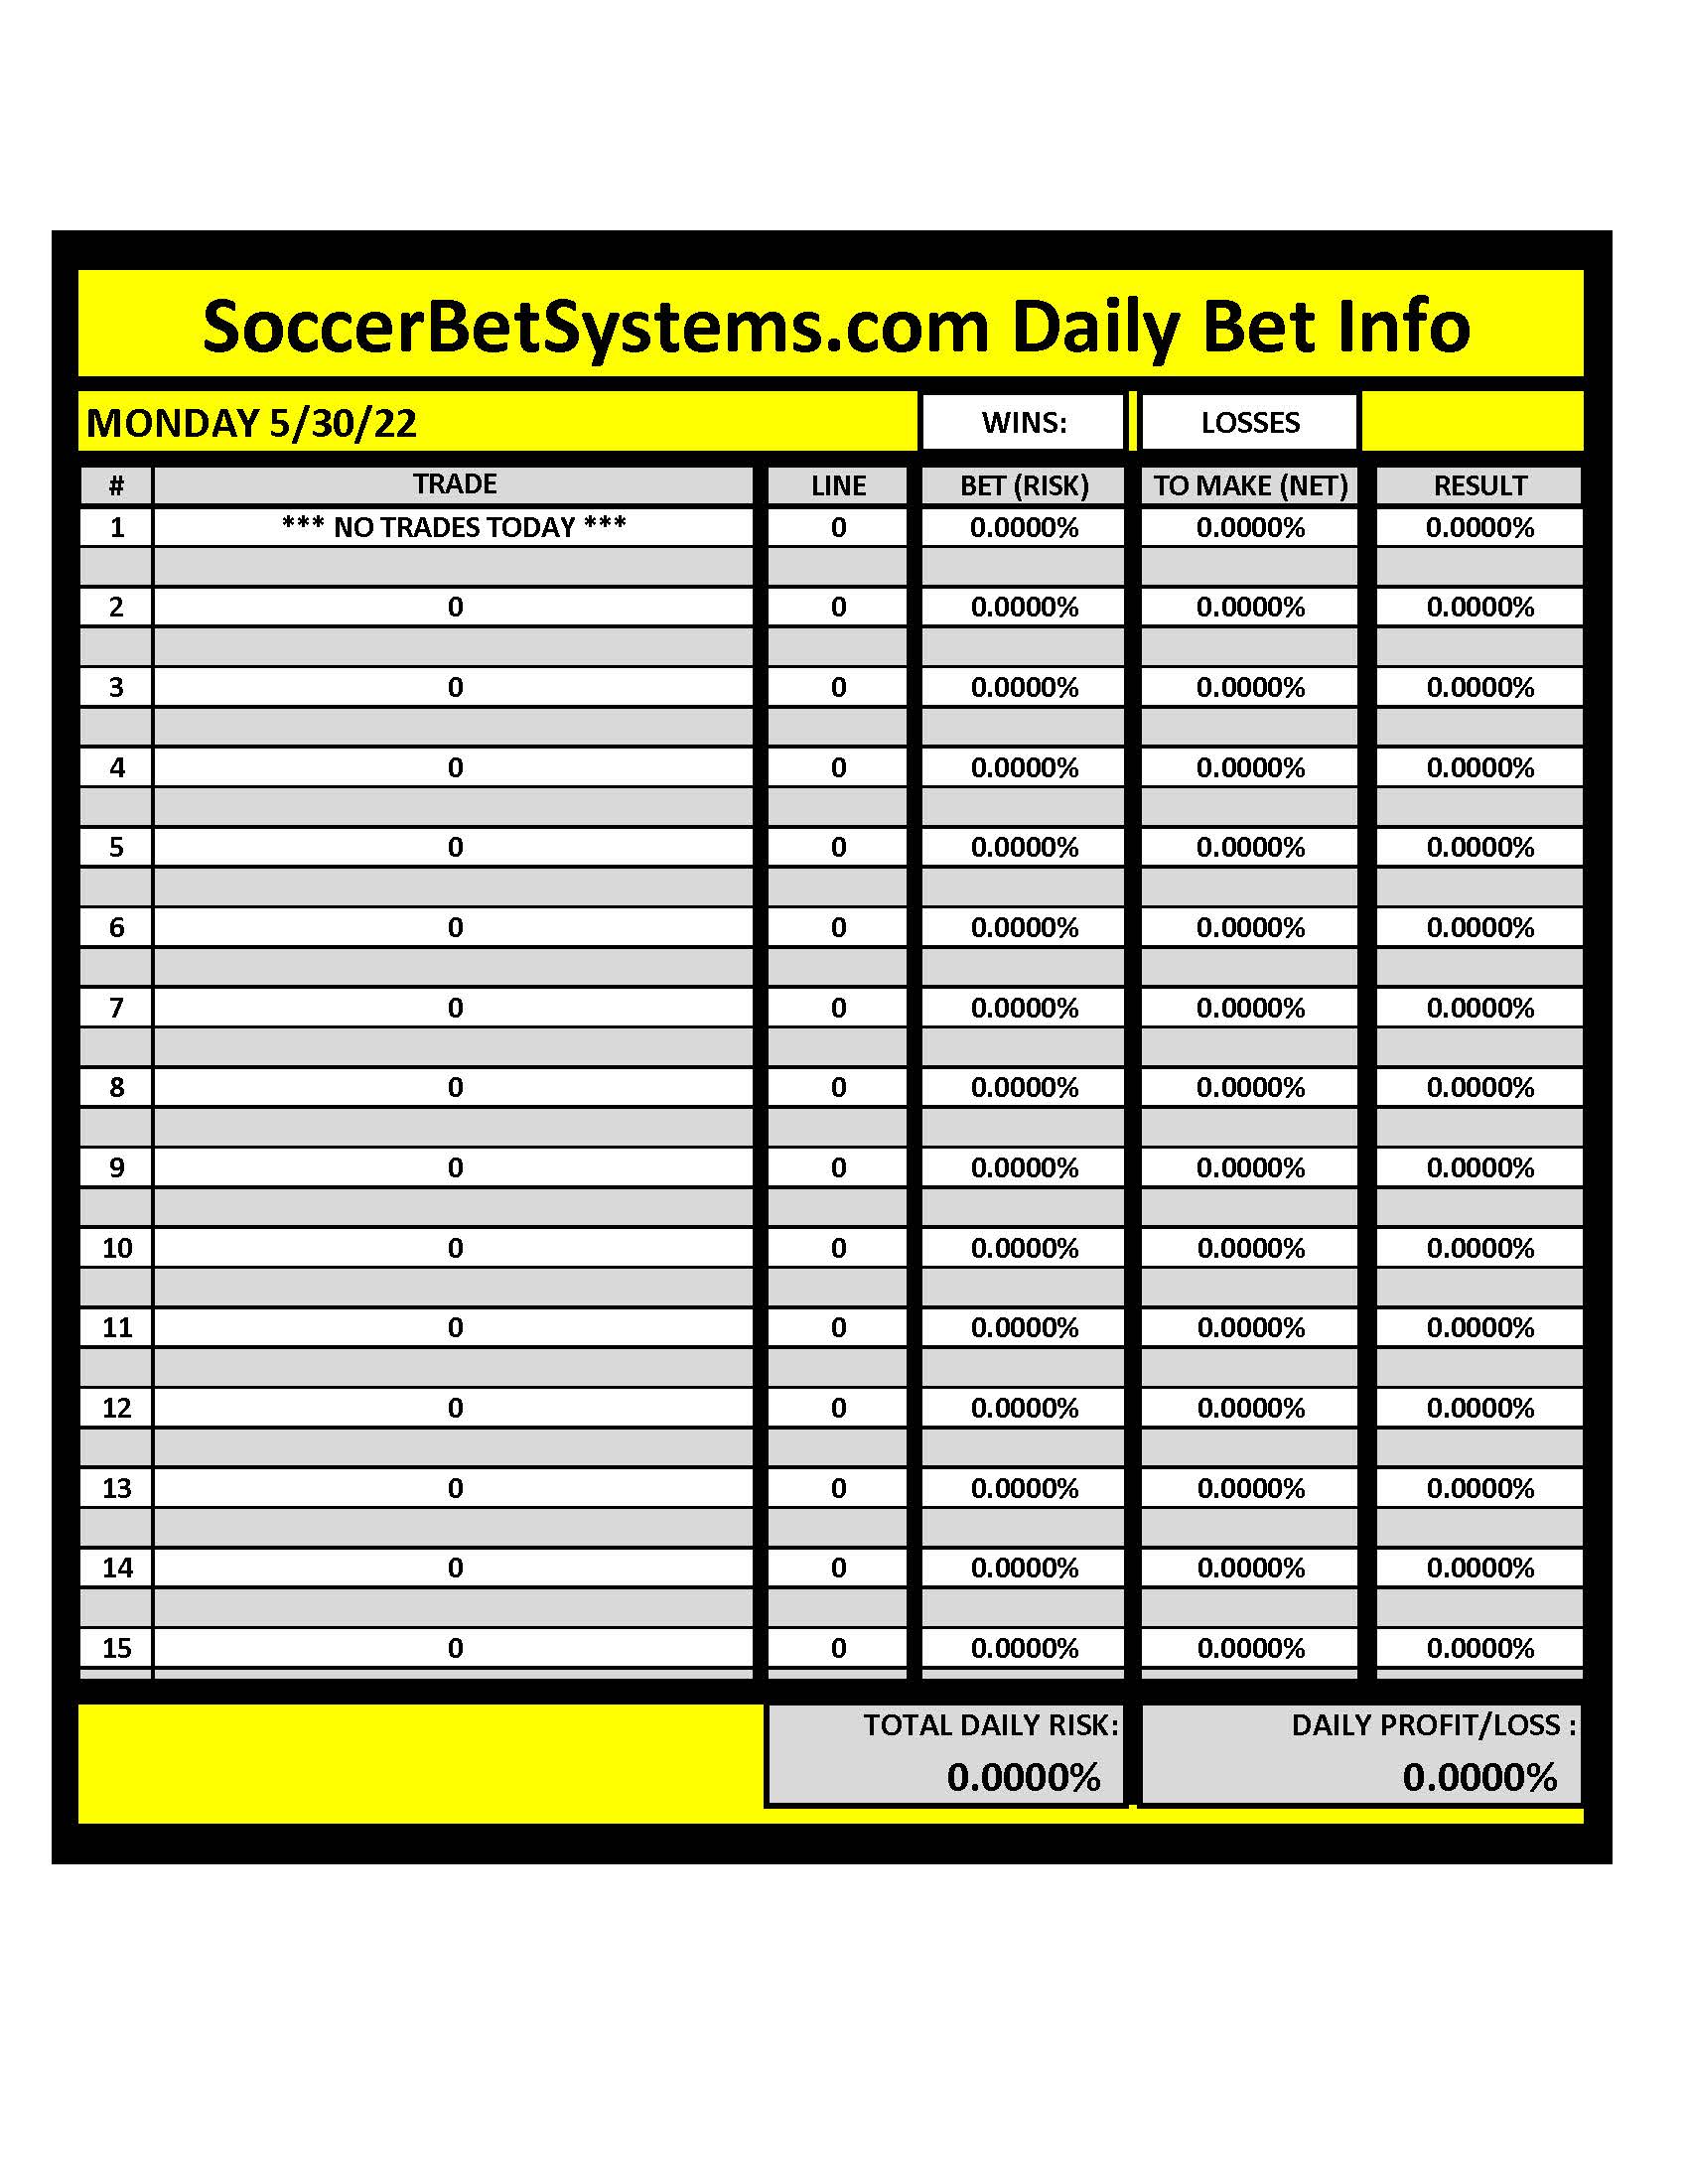 SoccerBetSystems.com 5/30/22 Daily Results